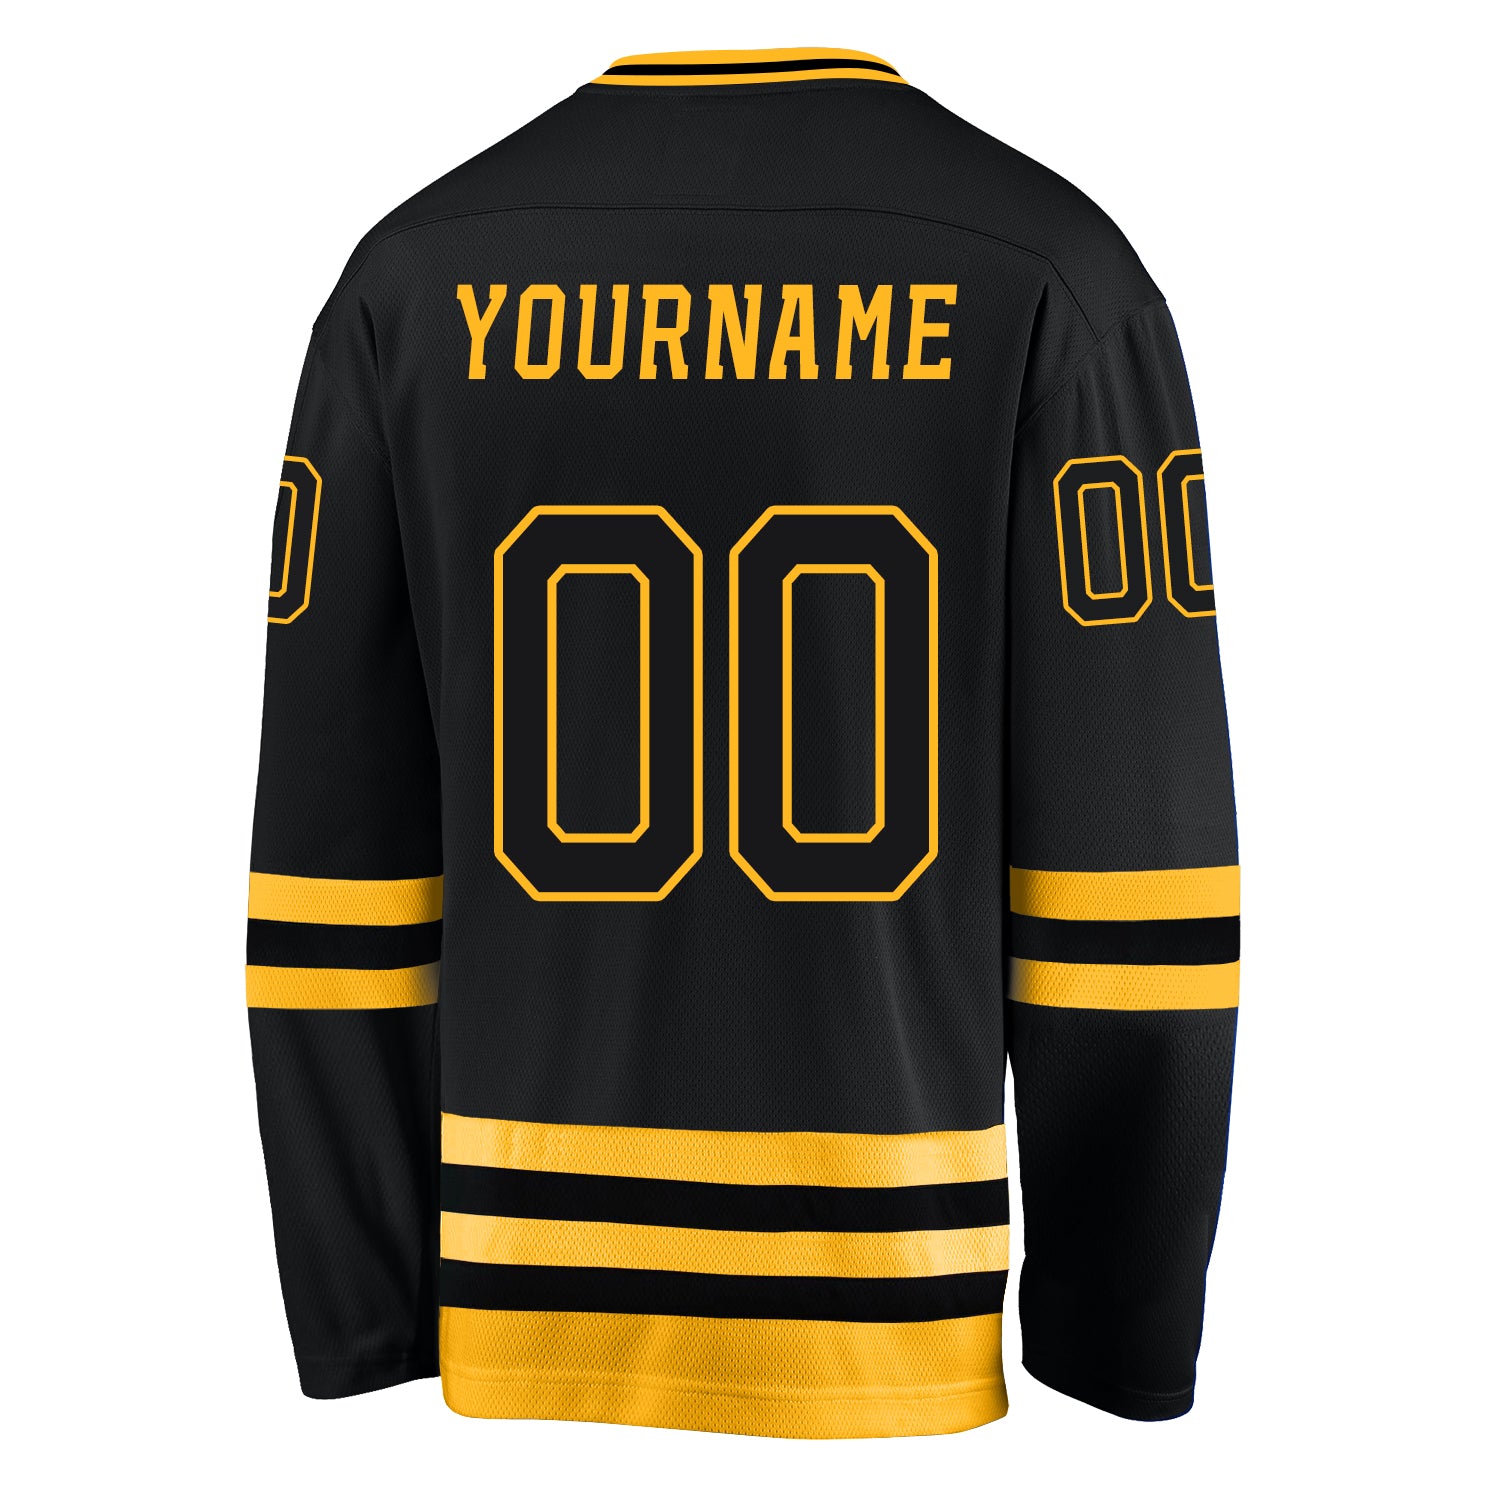 Personalized St. Patrick's Day Boston Bruins hockey jersey